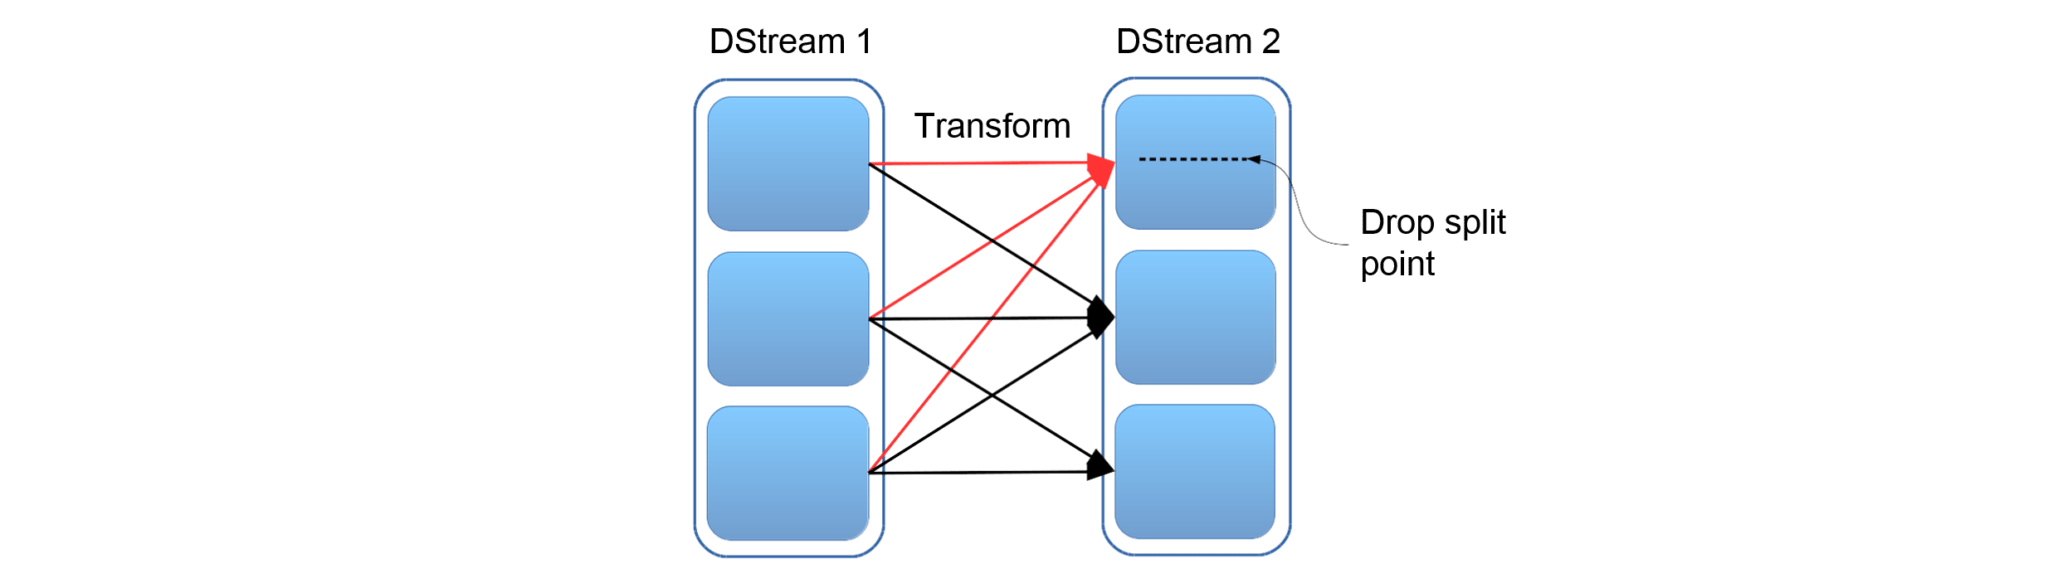 DStream Transformations - Spark Streaming - Edureka